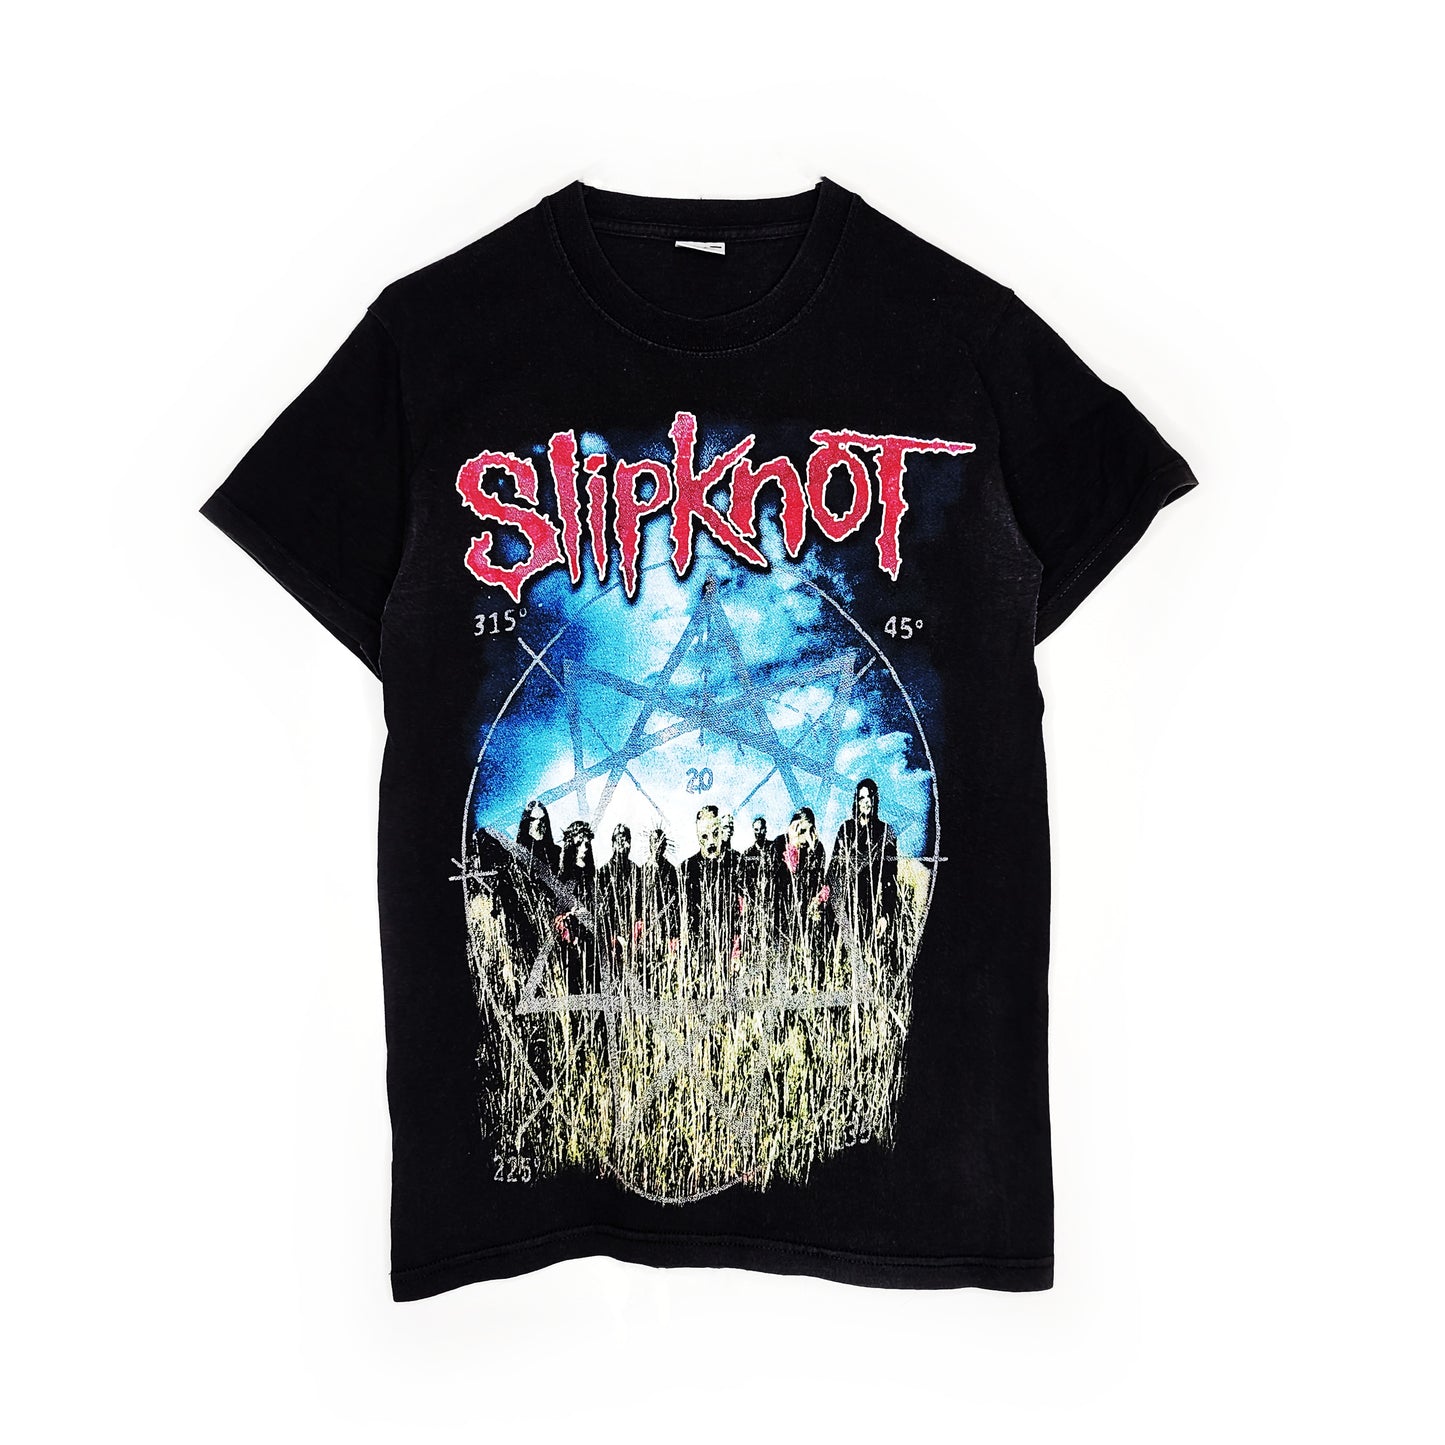 Tshirt vintage Slipknot - zimfriperie